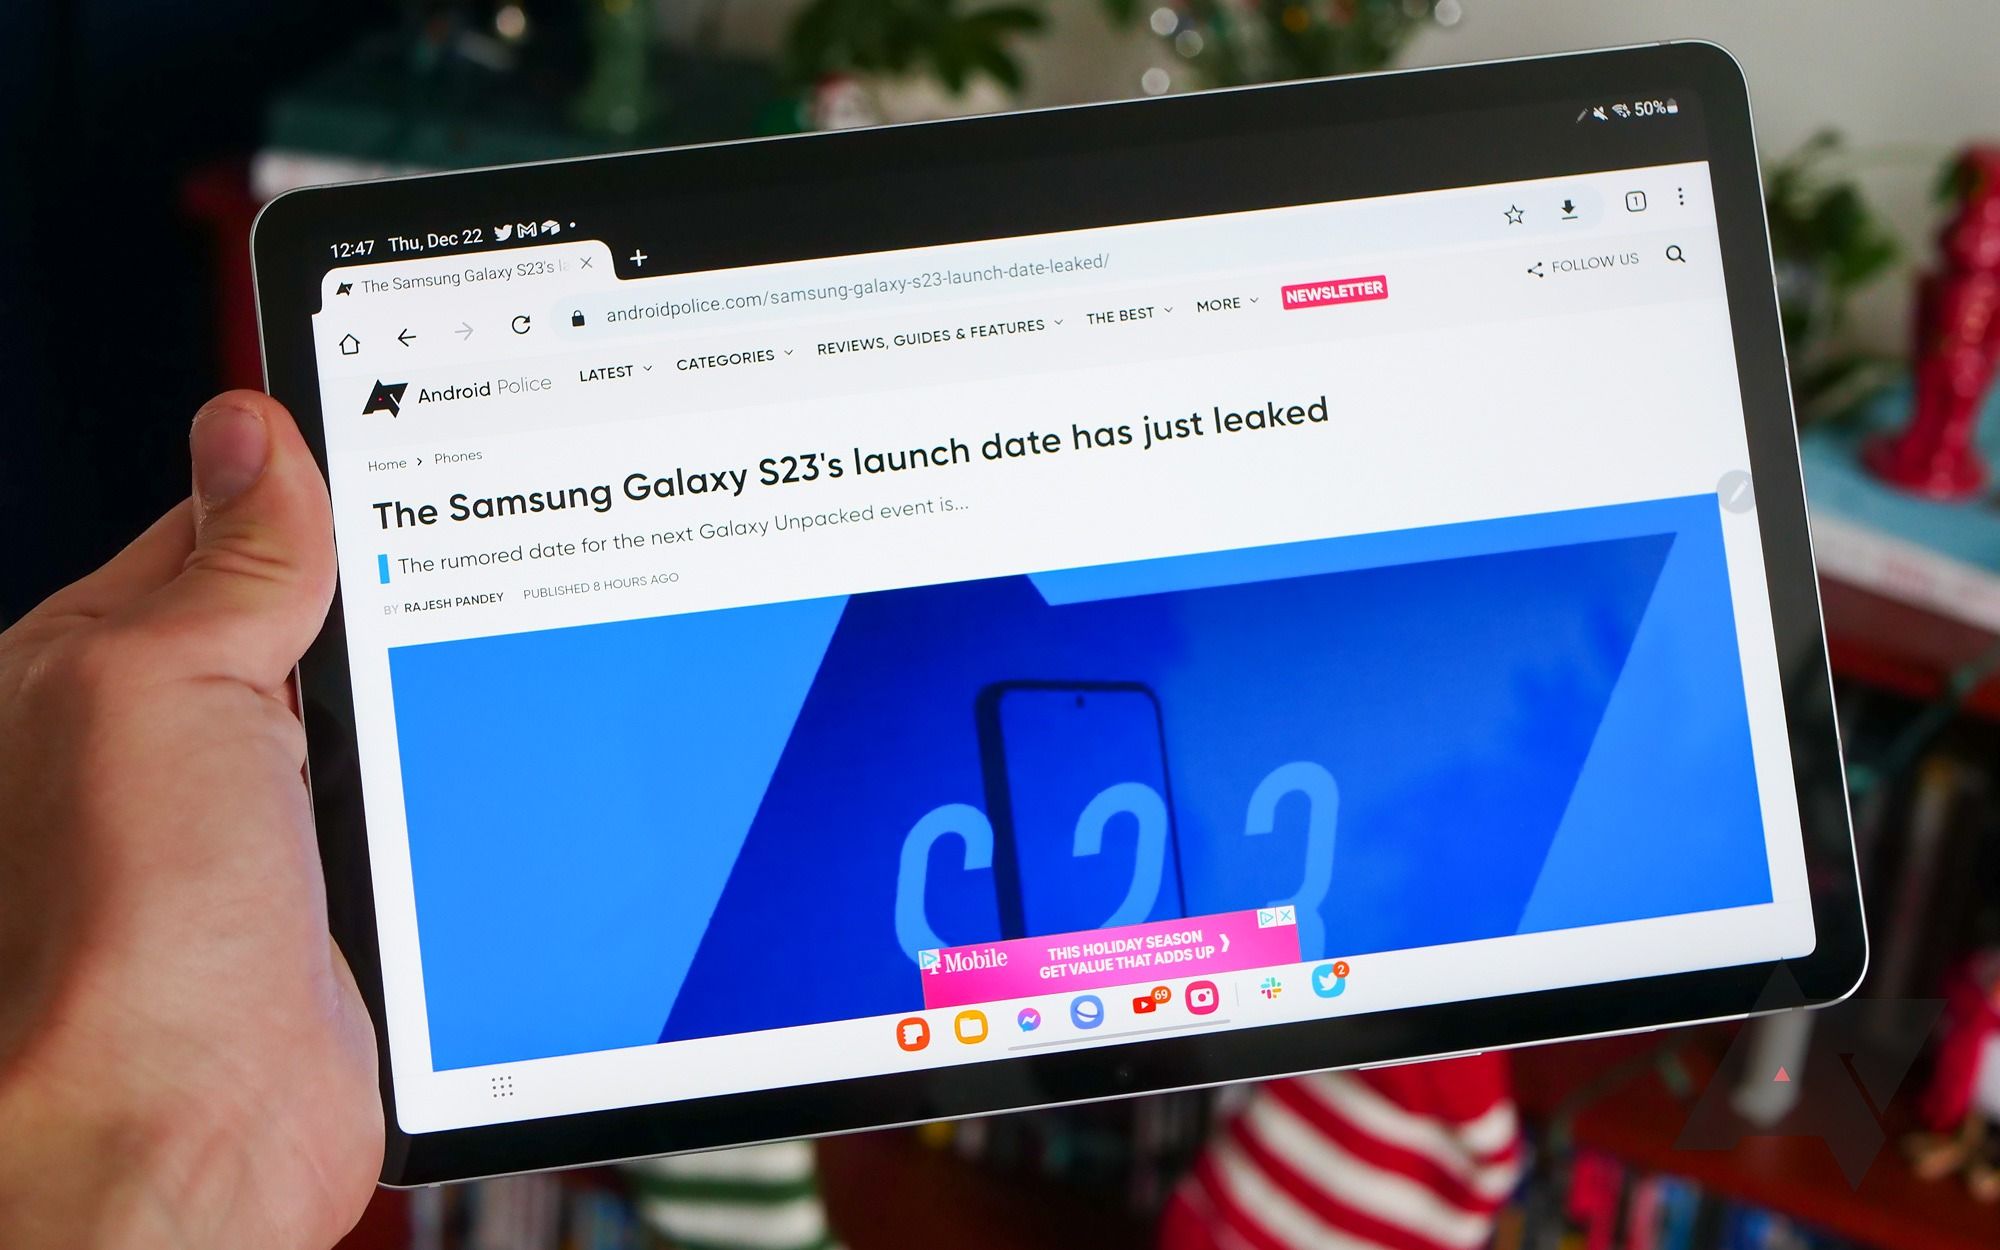 Samsung Galaxy Tab -  External Reviews